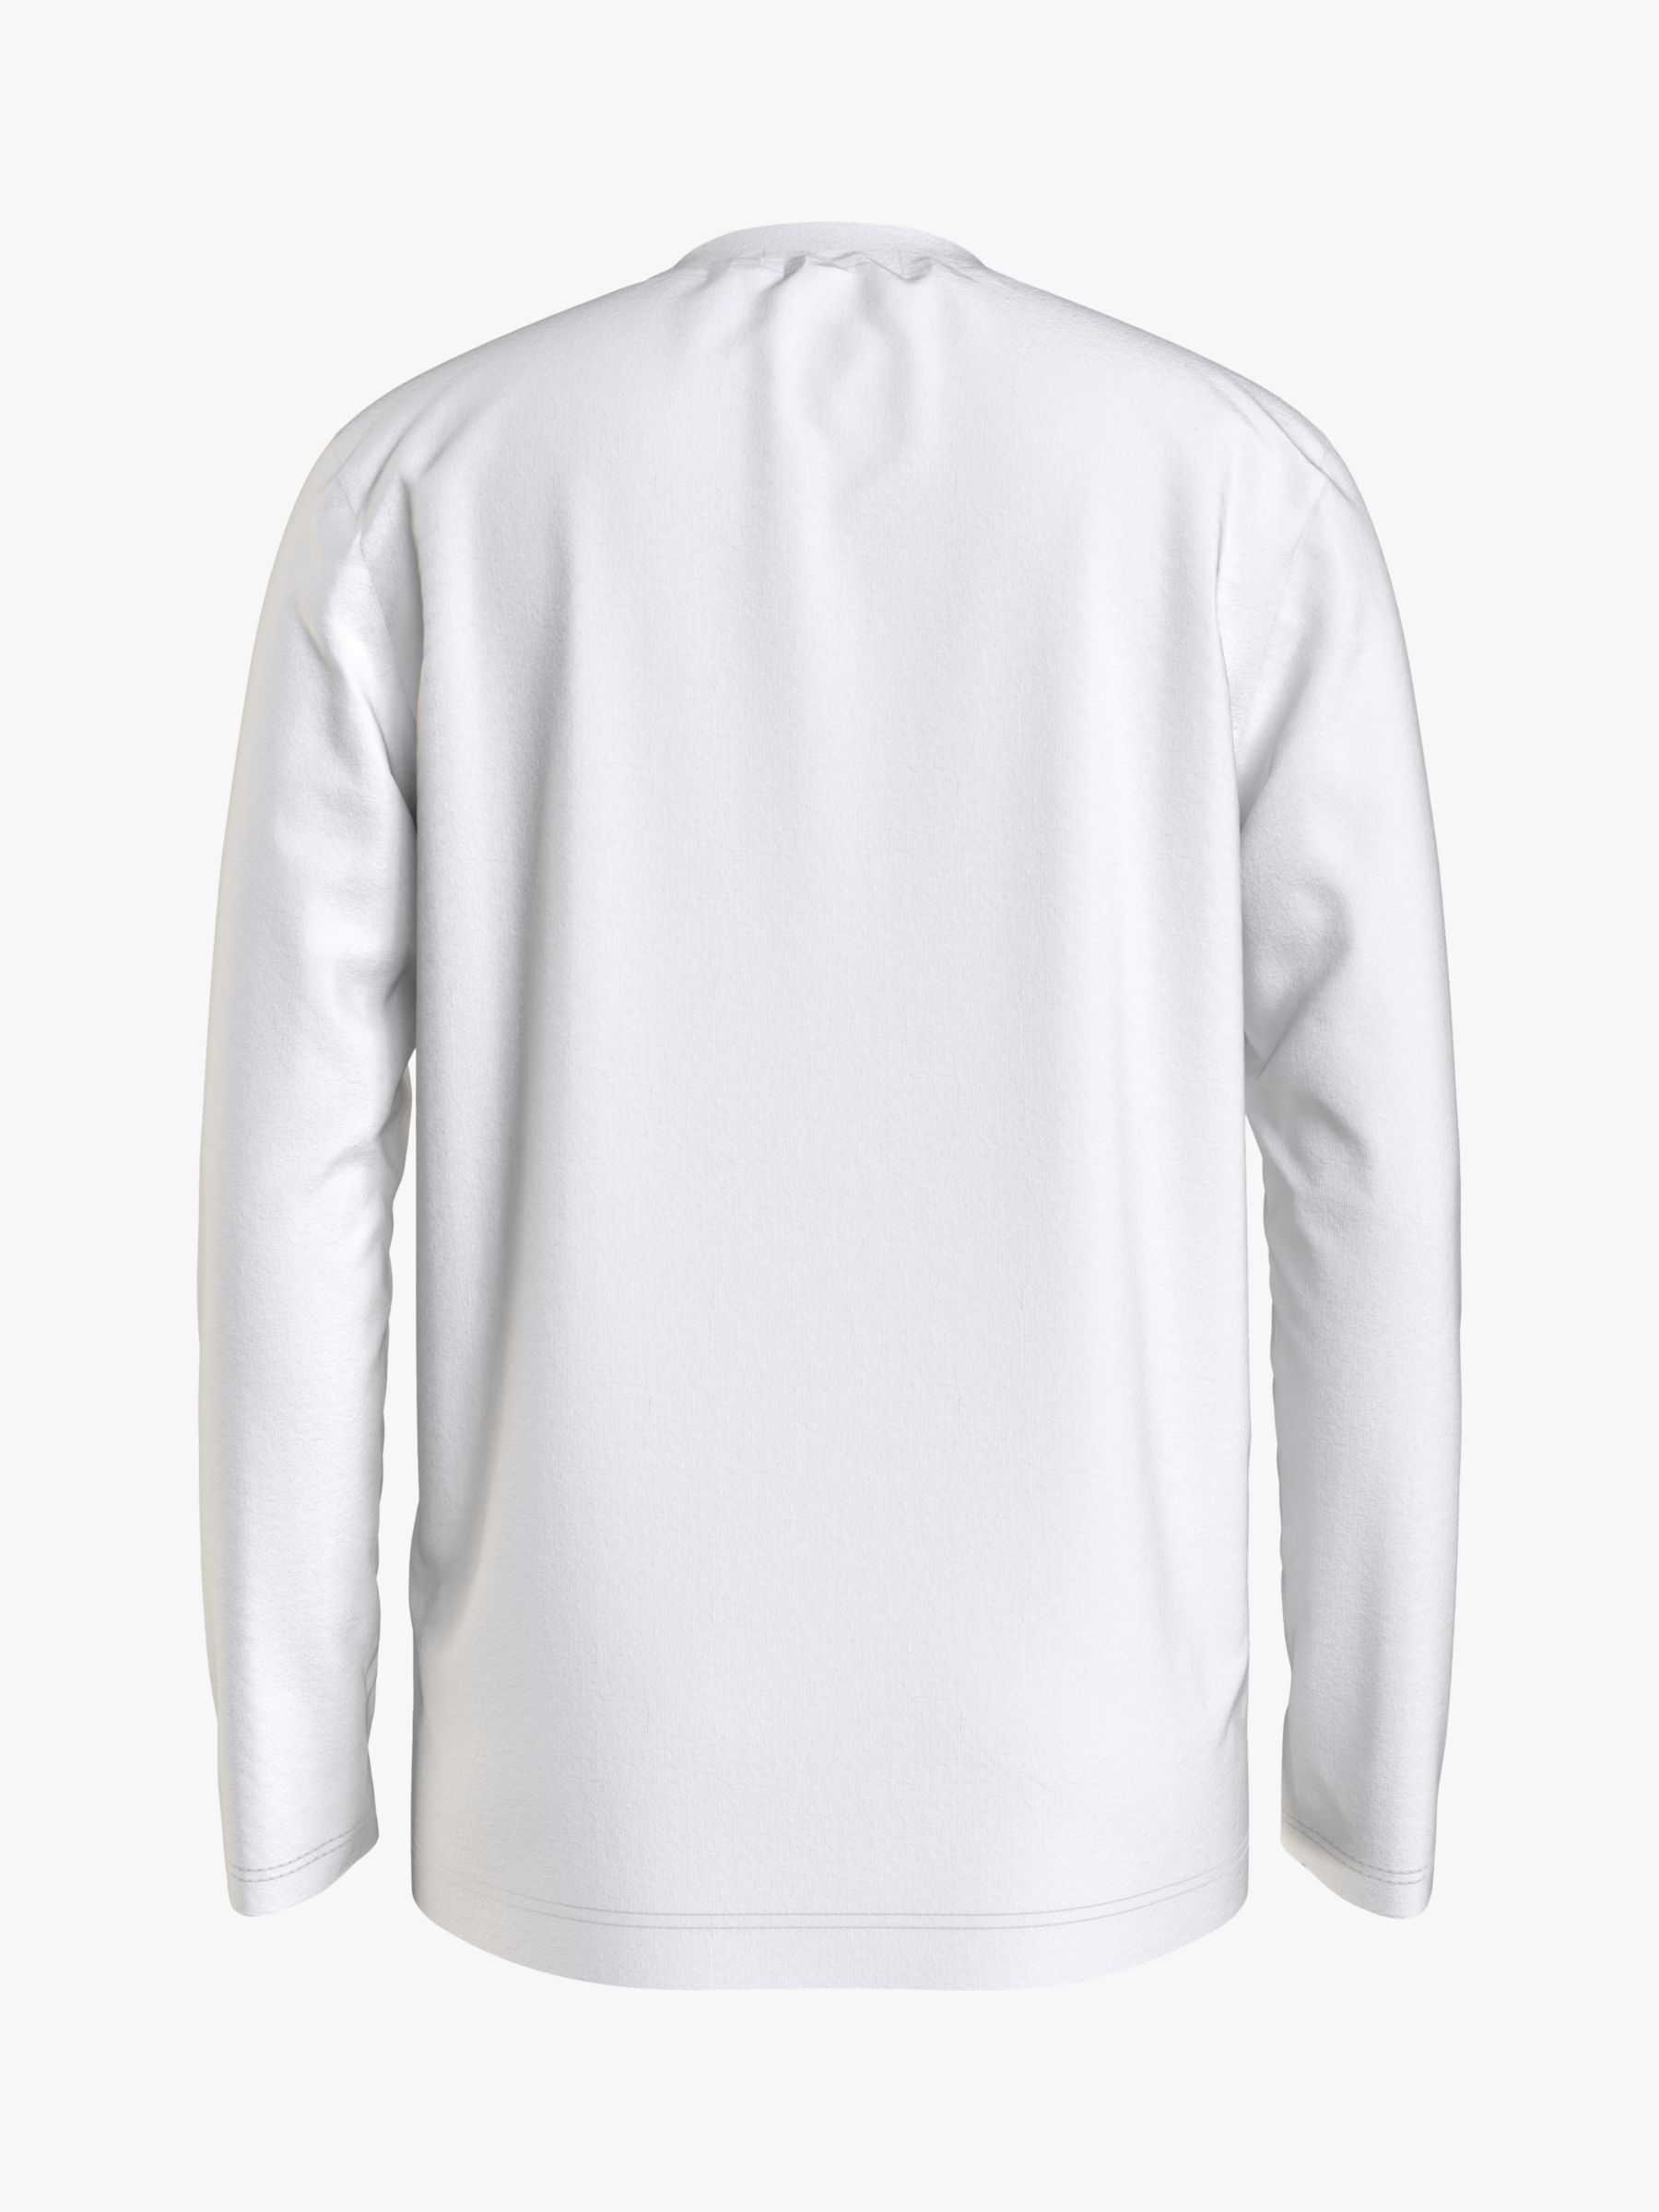 Calvin Klein Kids' Long Sleeve Print T-Shirt, White